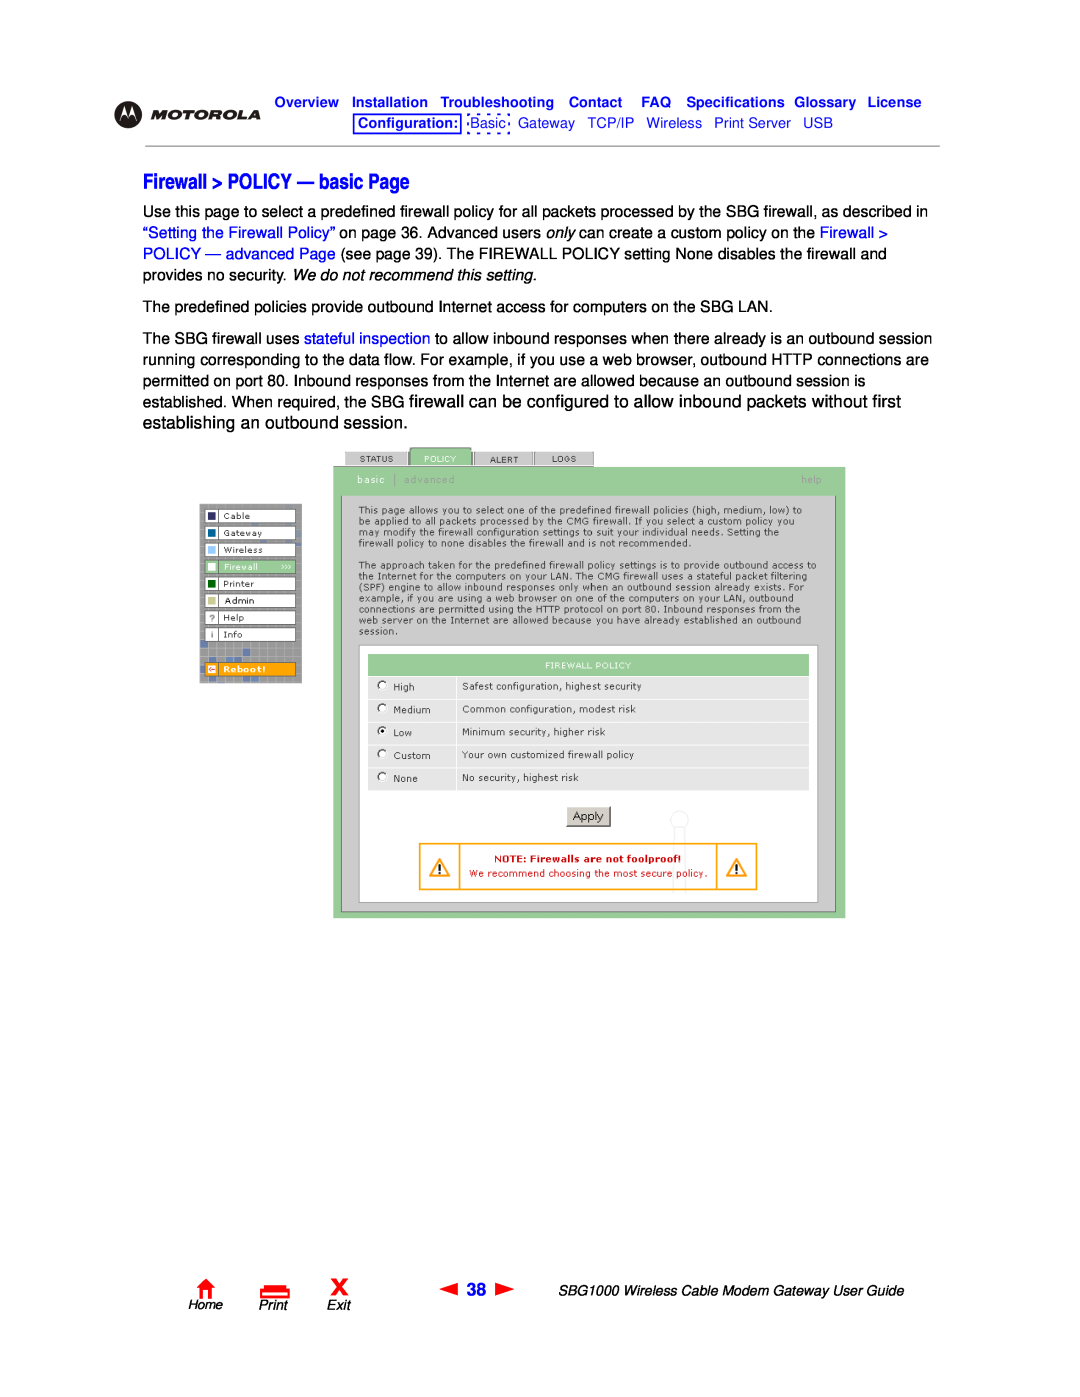 Motorola SBG1000 manual Firewall POLICY - basic Page, establishing an outbound session 